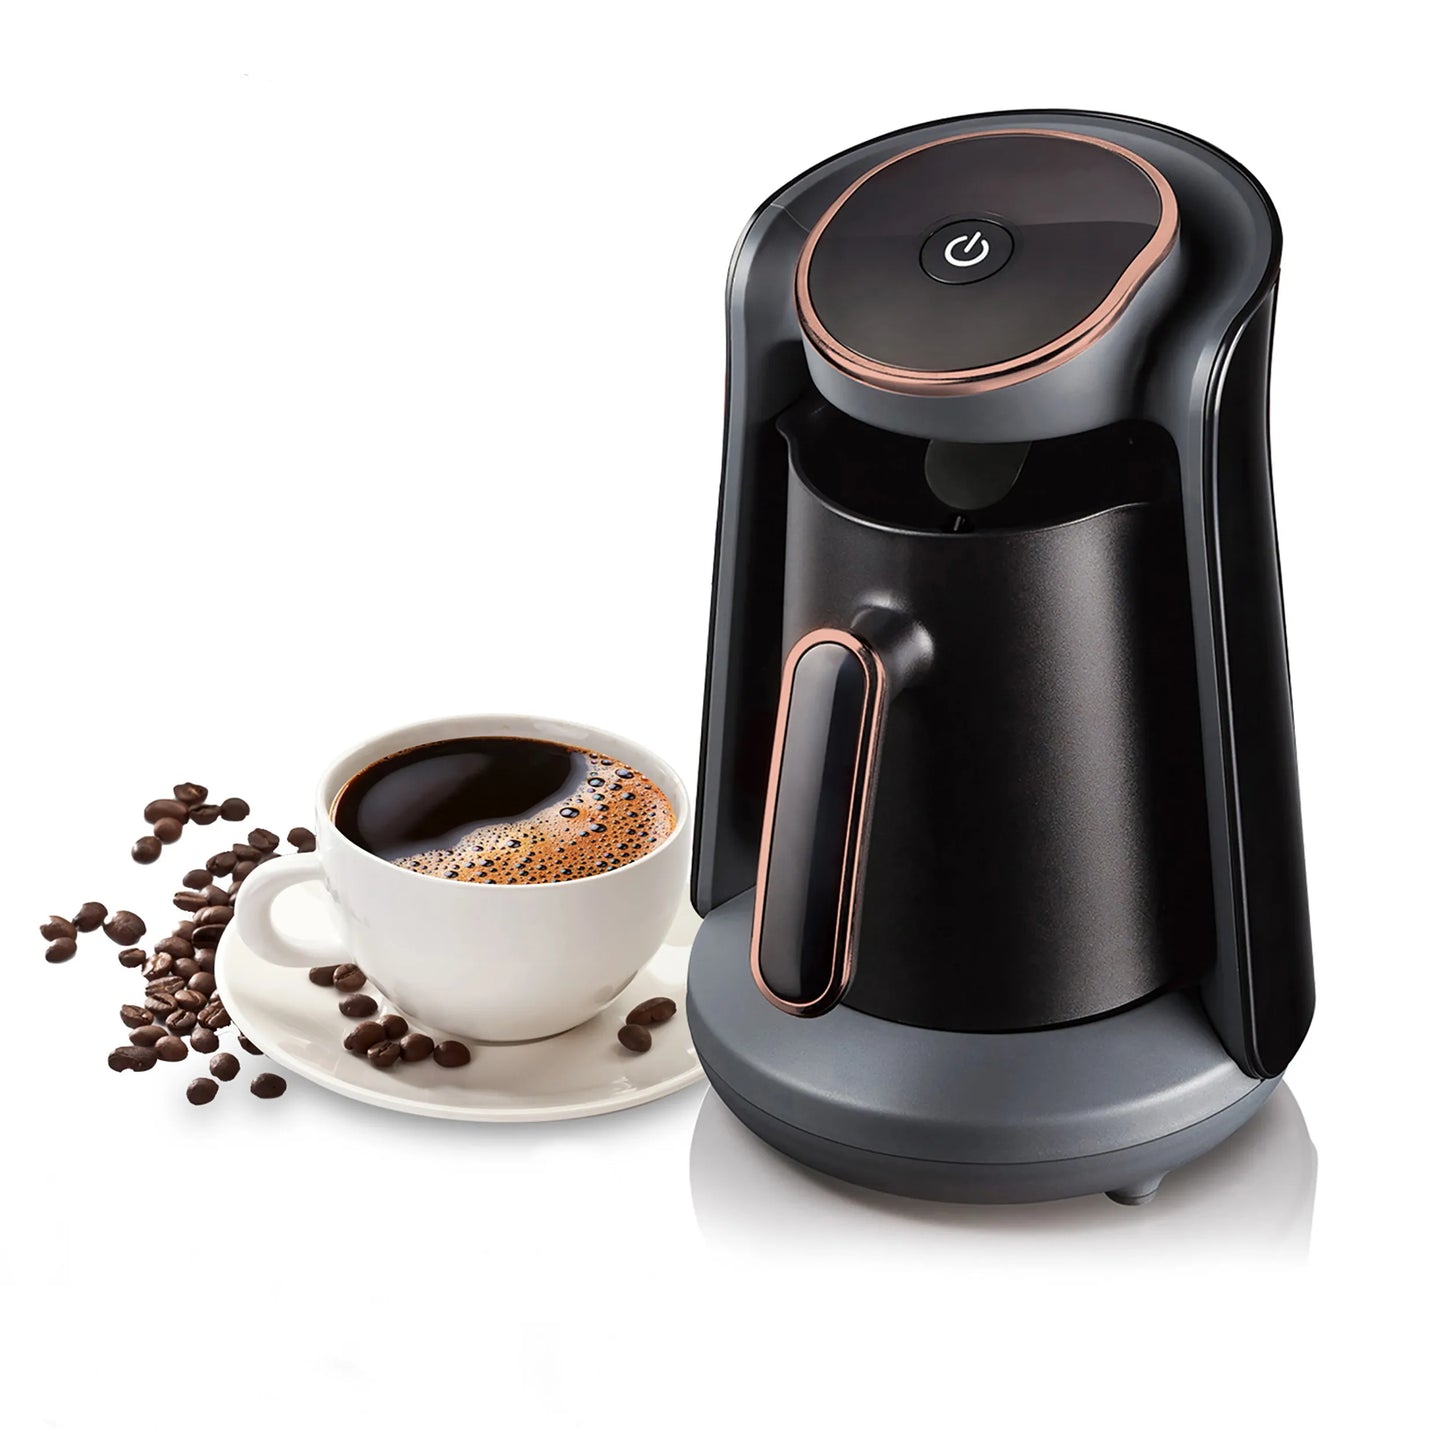 Coffee Pots Moka Pot 0.5L Semi-automatic Turkish Coffee Maker Thermal Cup Coffee Capsules For Coffee Machine Milk Cappuccino